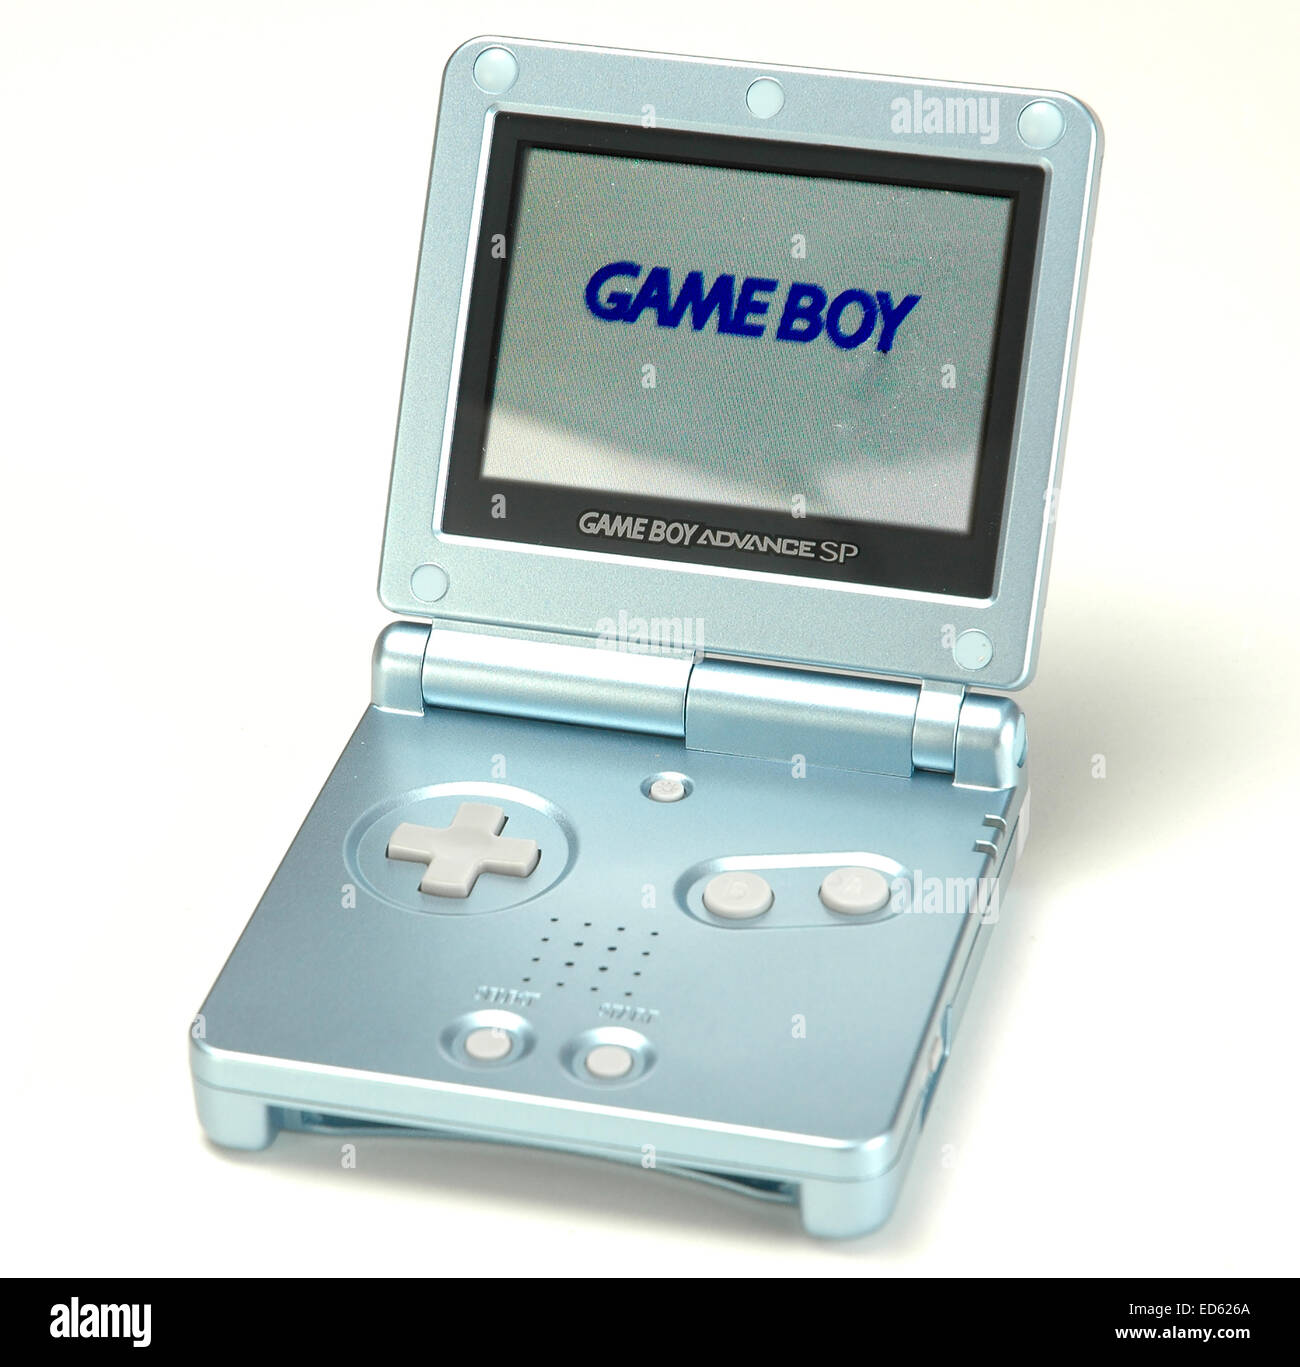 Nintendo Game Boy Advance SP console Stock Photo - Alamy